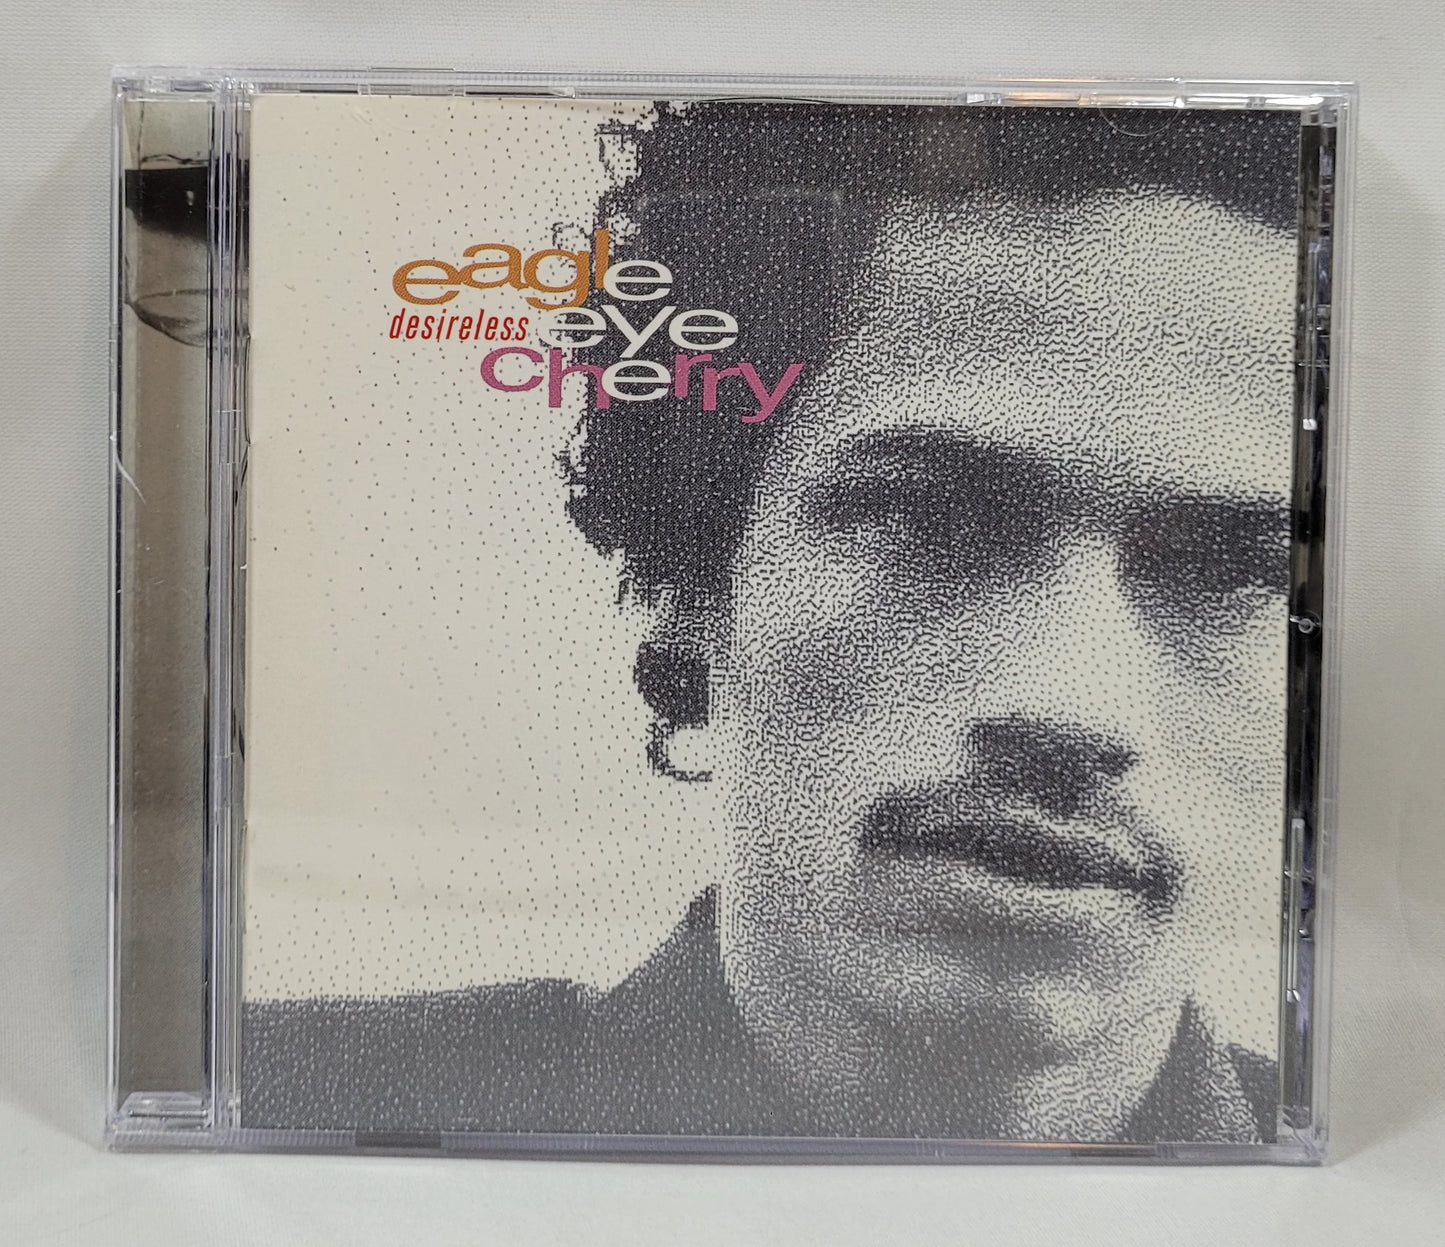 Eagle-Eye Cherry - Desireless [CD]